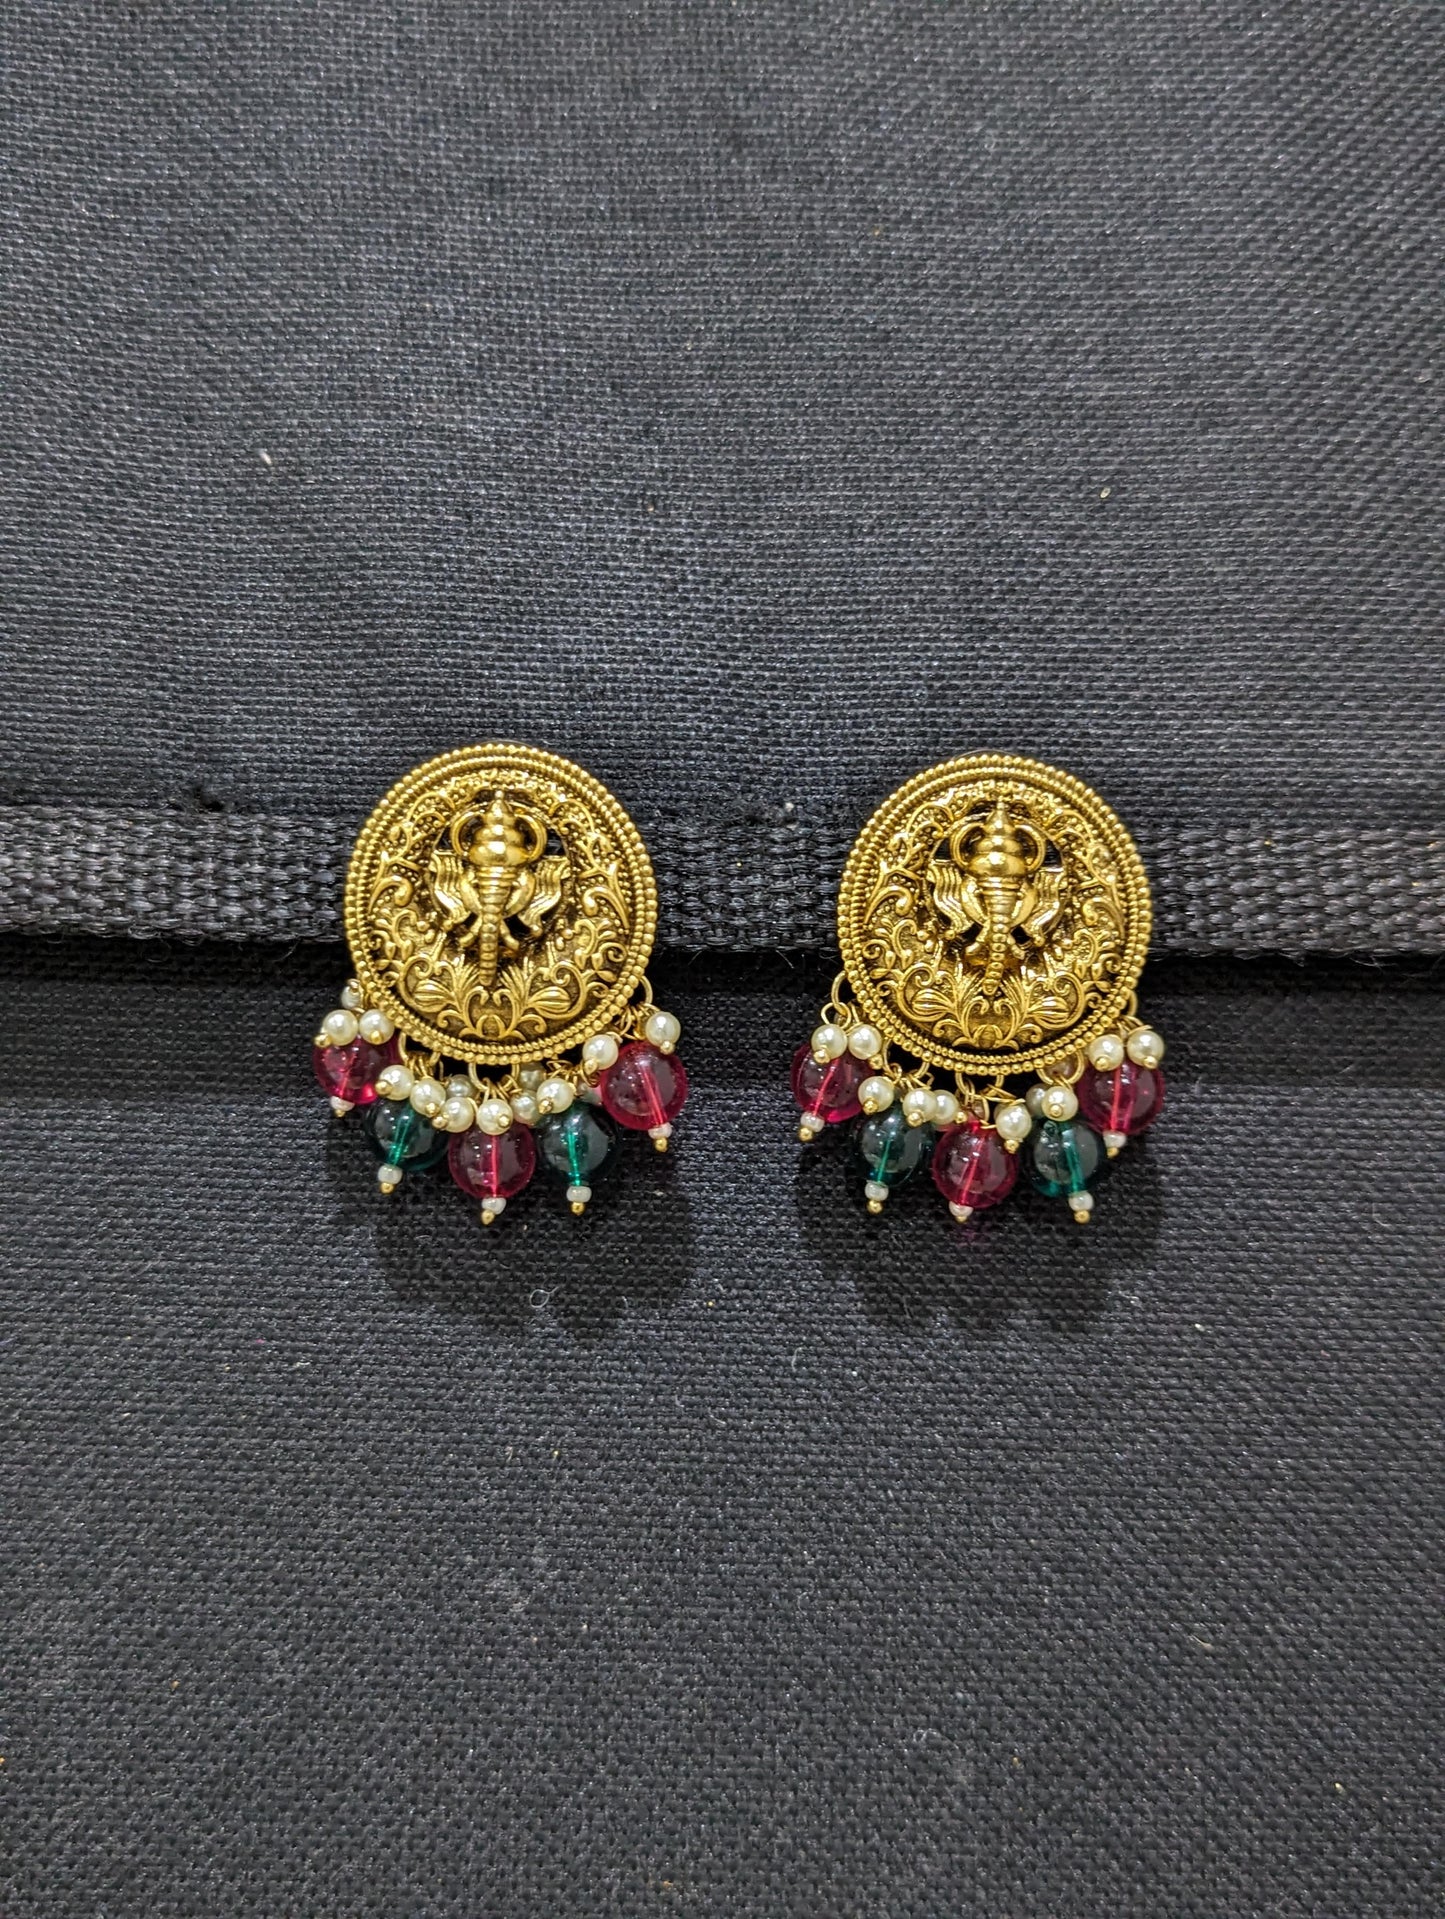 Ganesh ji Antique gold plated stud earrings